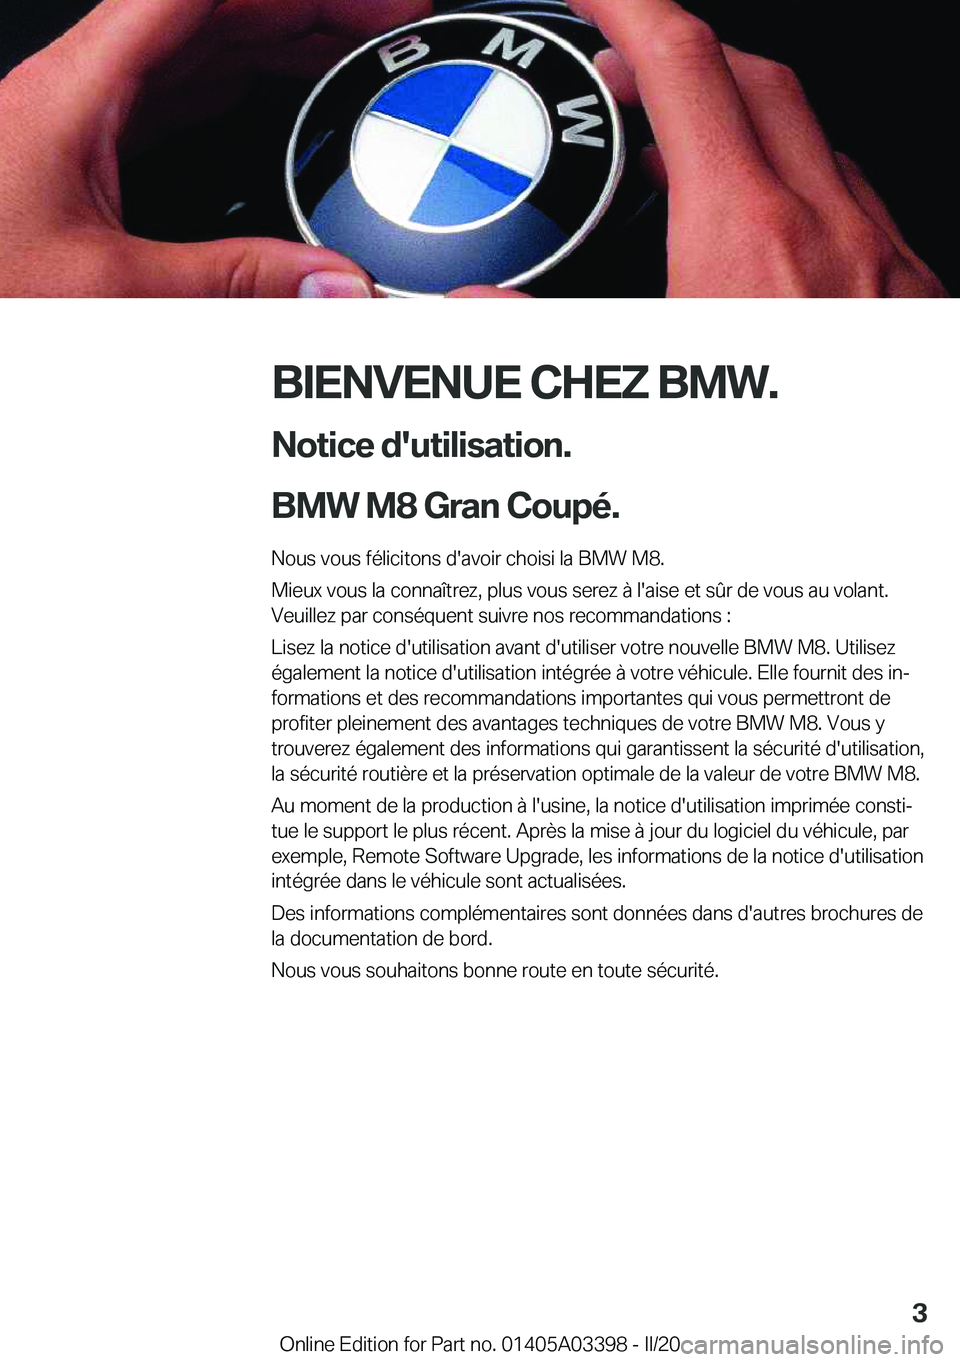 BMW M8 GRAN COUPE 2020  Notices Demploi (in French) �B�I�E�N�V�E�N�U�E��C�H�E�Z��B�M�W�.�N�o�t�i�c�e��d�'�u�t�i�l�i�s�a�t�i�o�n�.
�B�M�W��M�8��G�r�a�n��C�o�u�p�é�. �N�o�u�s��v�o�u�s��f�é�l�i�c�i�t�o�n�s��d�'�a�v�o�i�r��c�h�o�i�s�i�